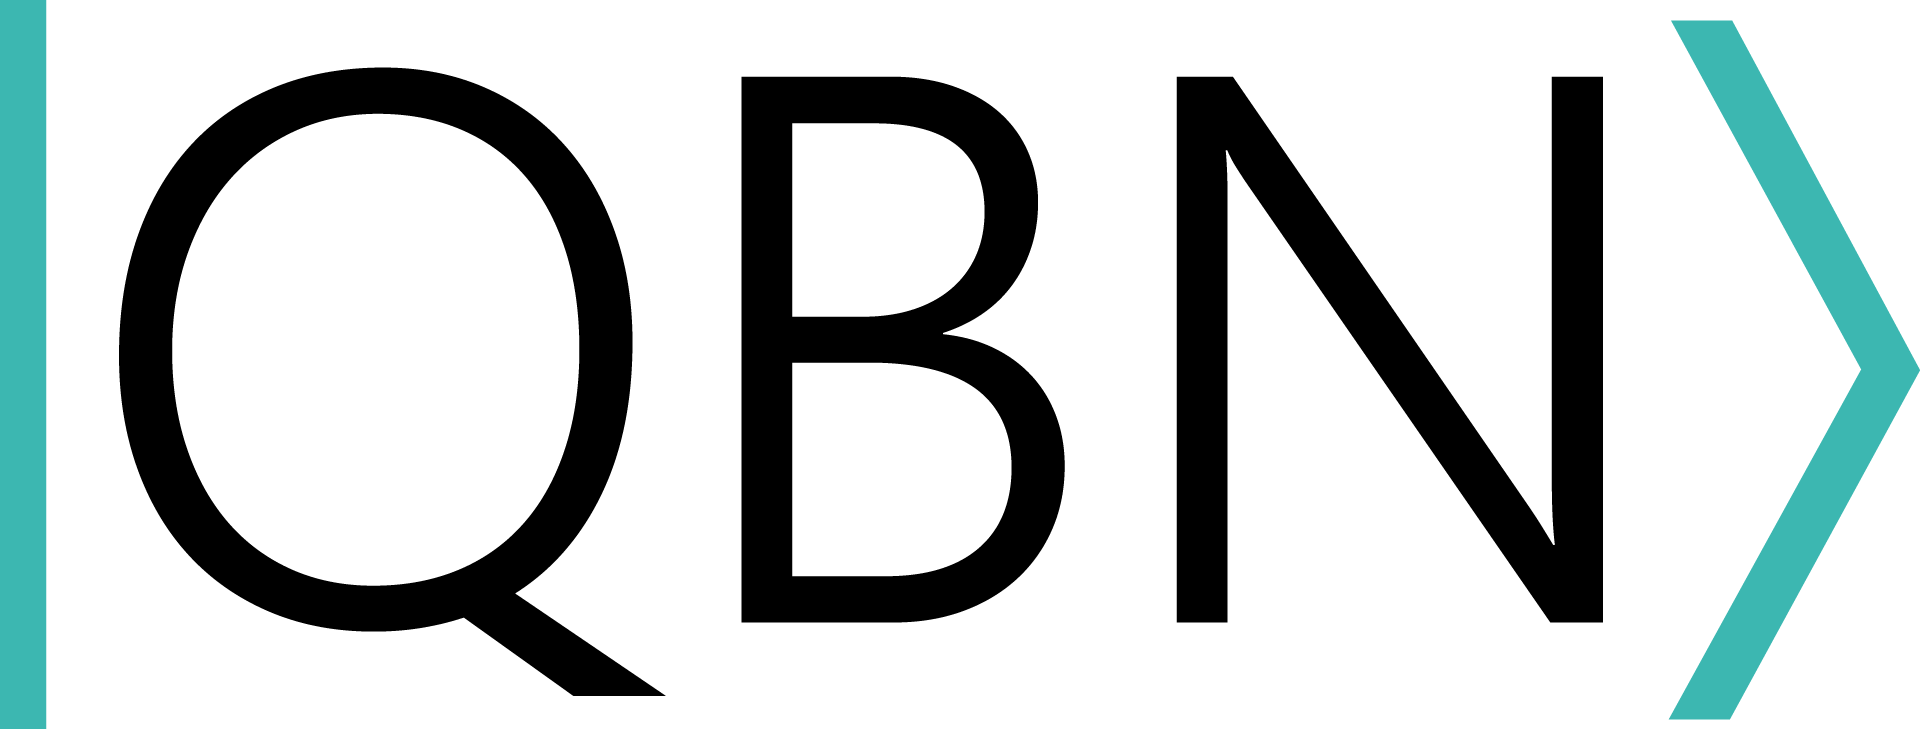 Quantum Business Network (QBN)